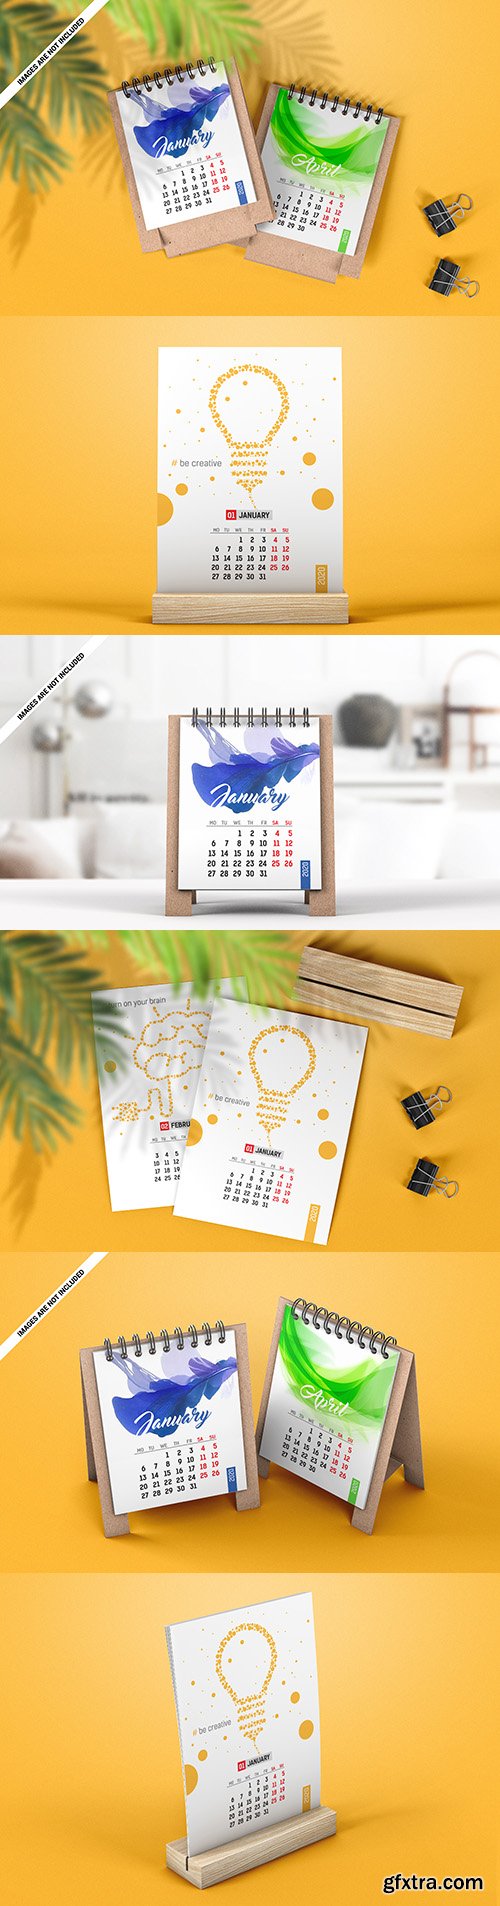 Calendar vertical pages and mini-desktop calendar Mock-Up